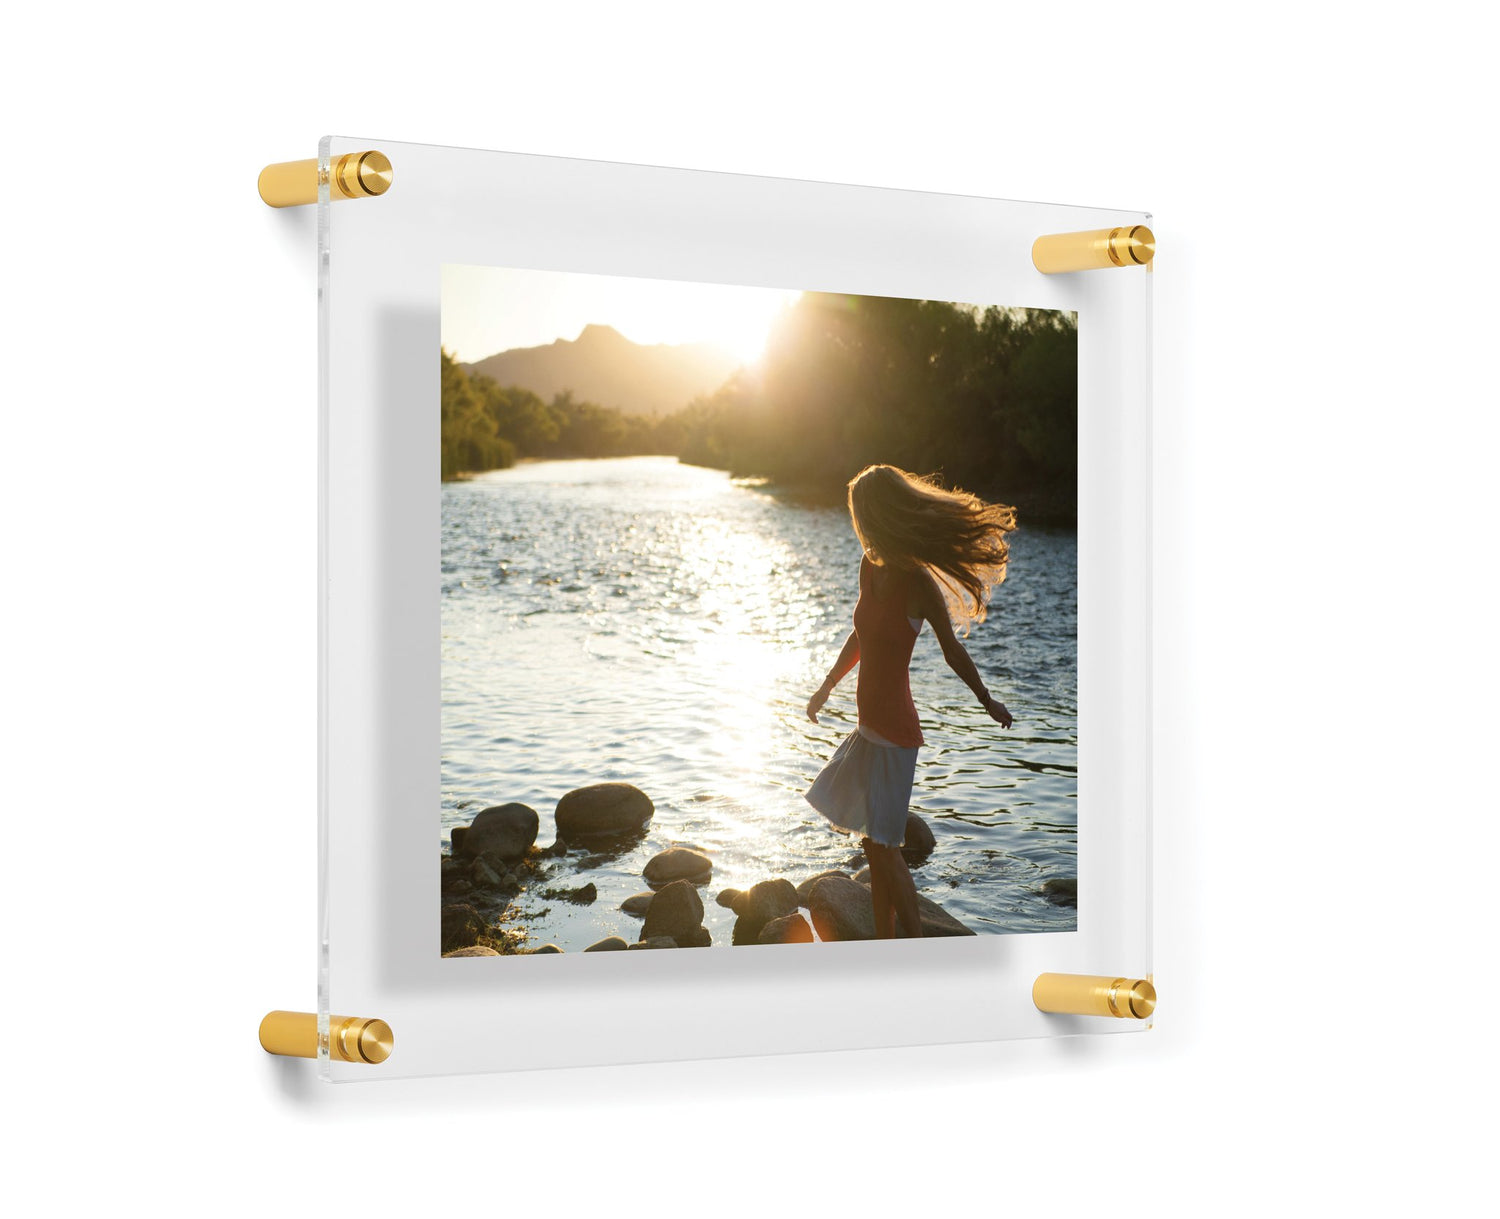 Double Panel Acrylic Floating Frames, Gold